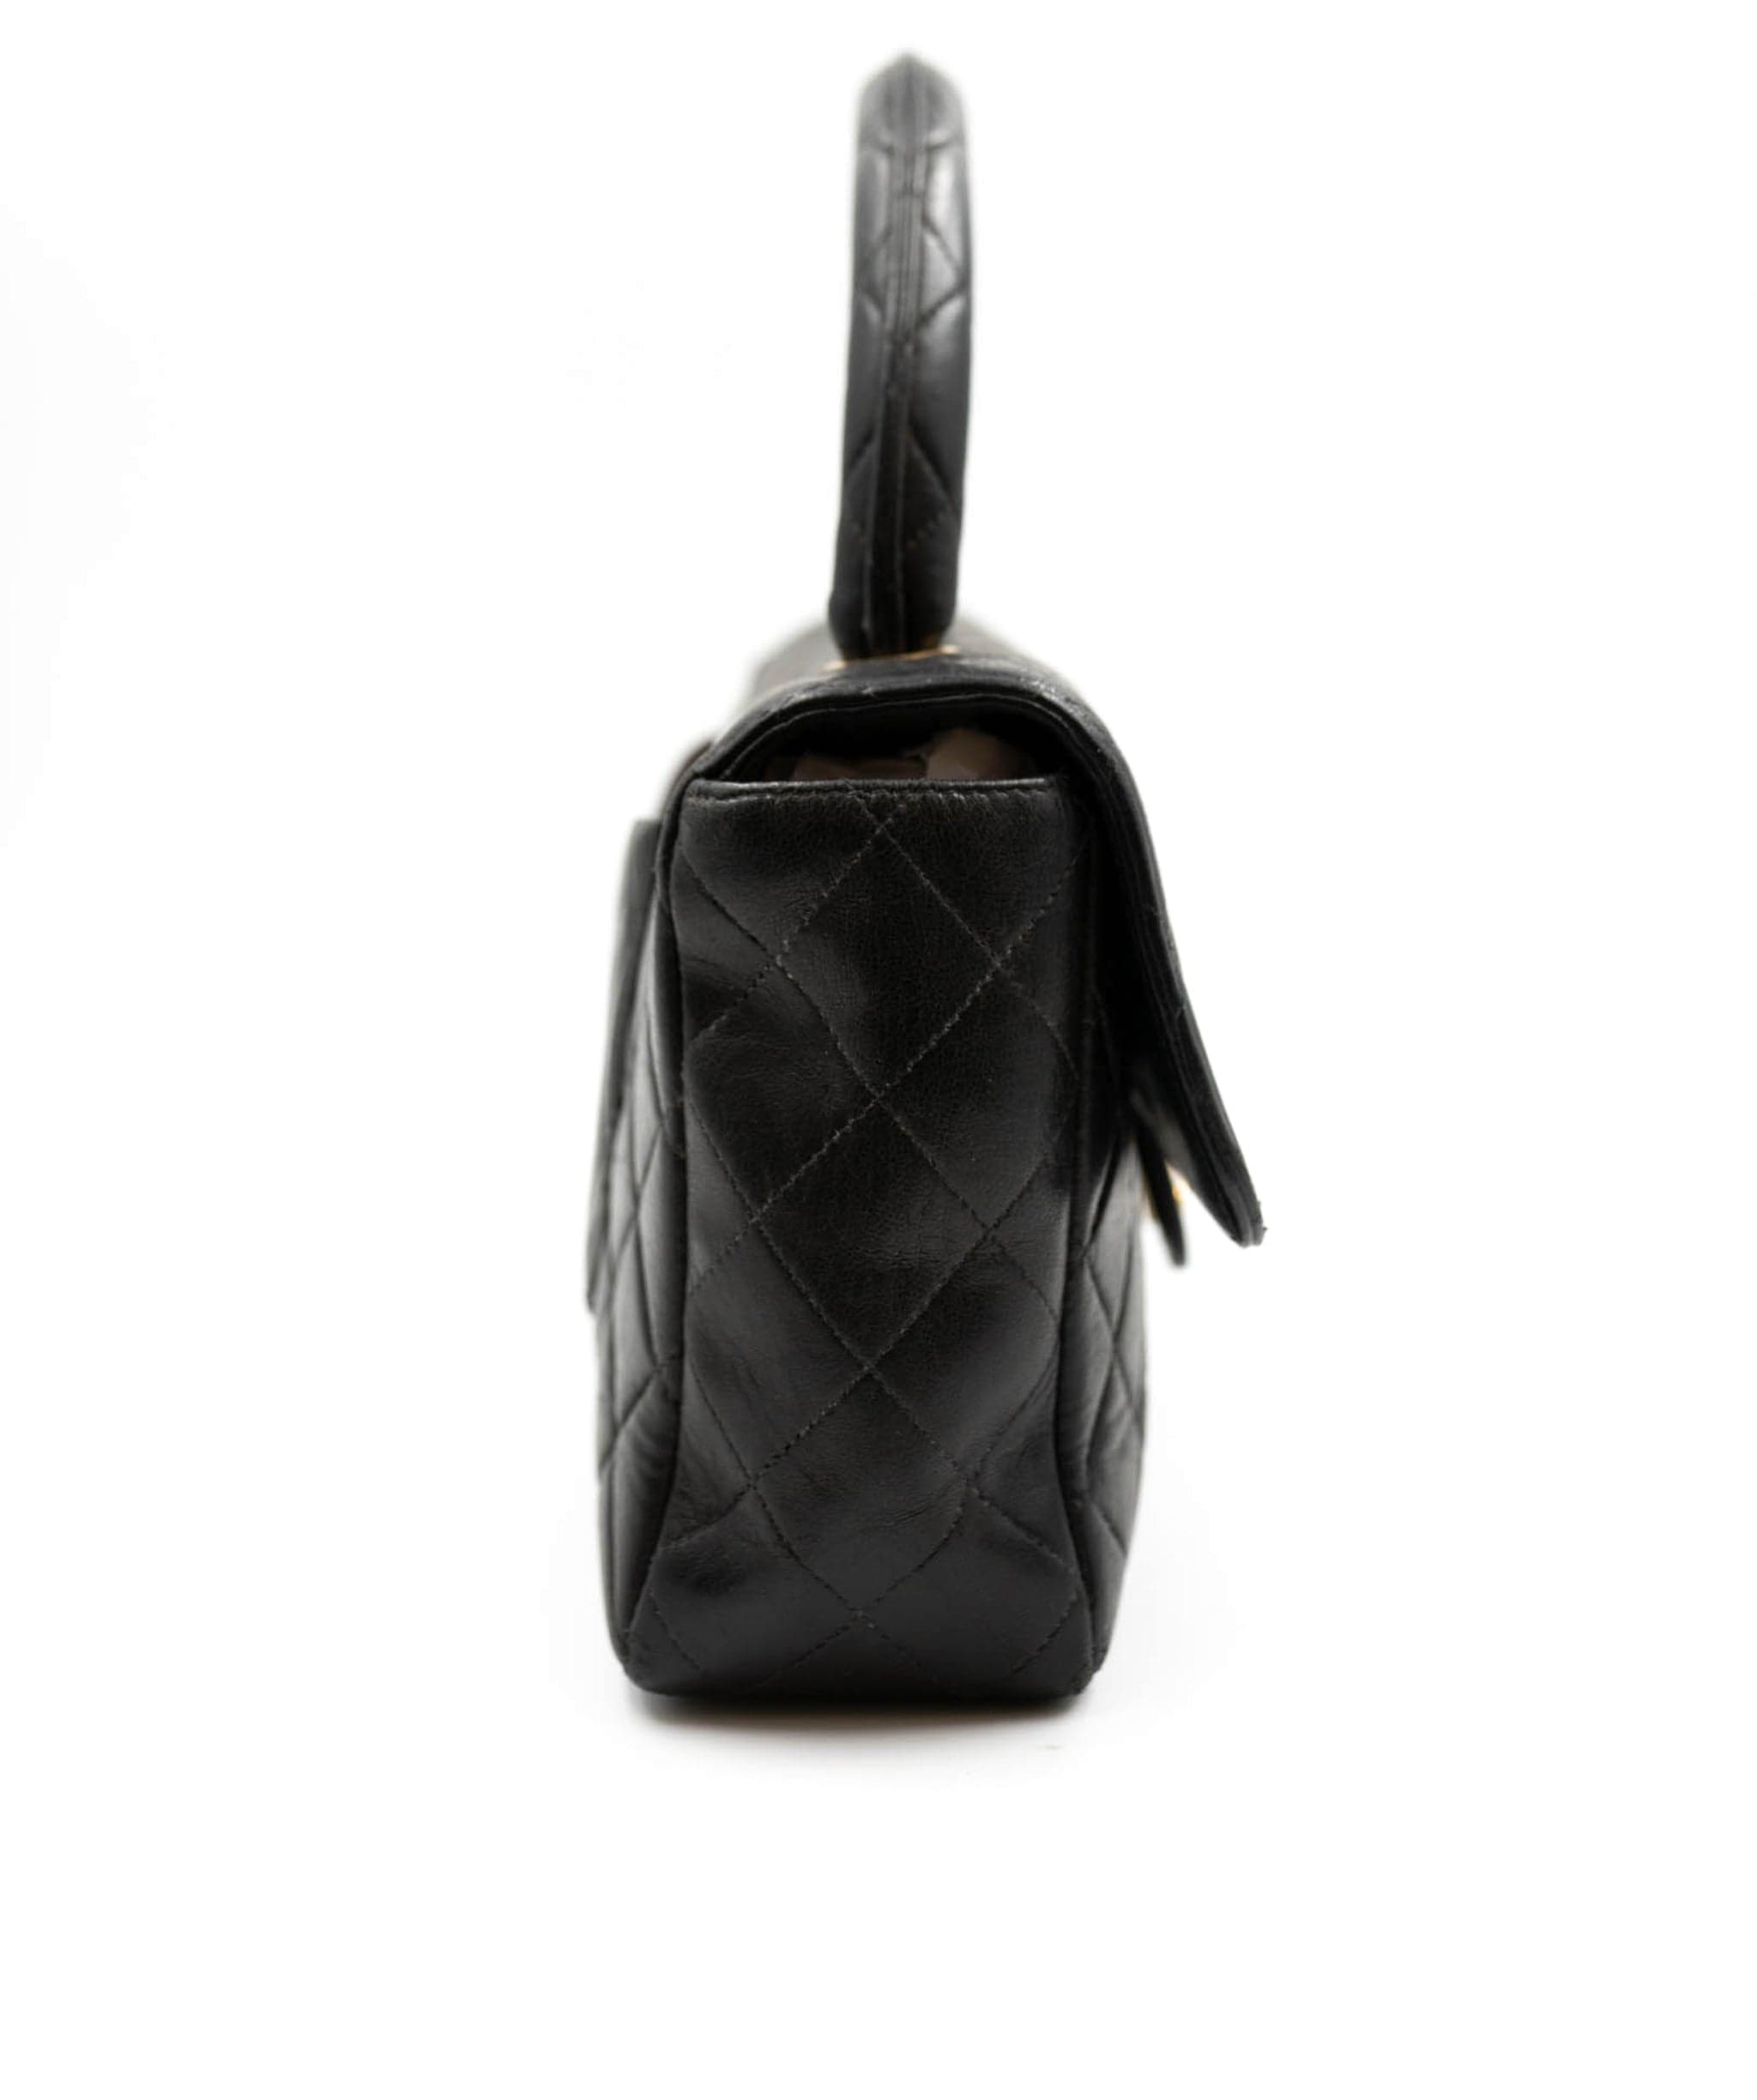 Chanel Vintage Chanel Medium Kelly Bag Black Lambskin GHW - ASL1959